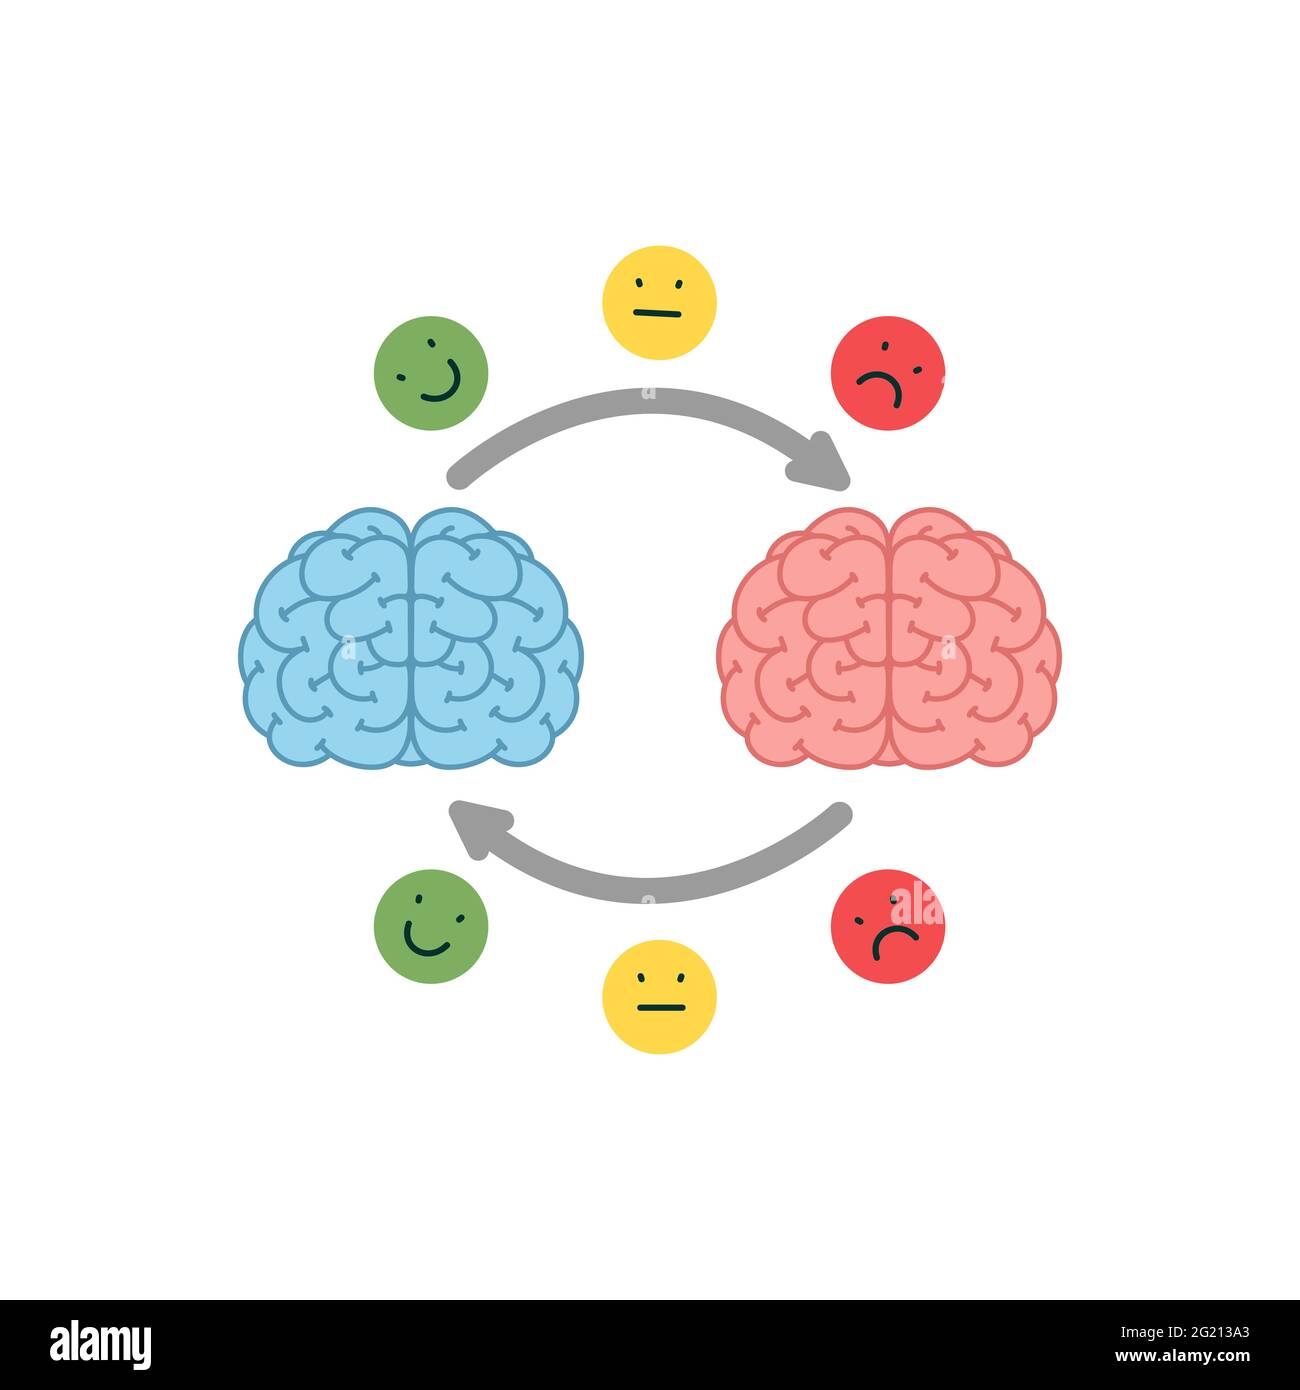 Empatía. Concepto de empatía e intercambio de emociones: Dos cerebros  humanos con un esquema abstracto de intercambio de emociones. Ilustración  vectorial en dibujos animados planos Imagen Vector de stock - Alamy